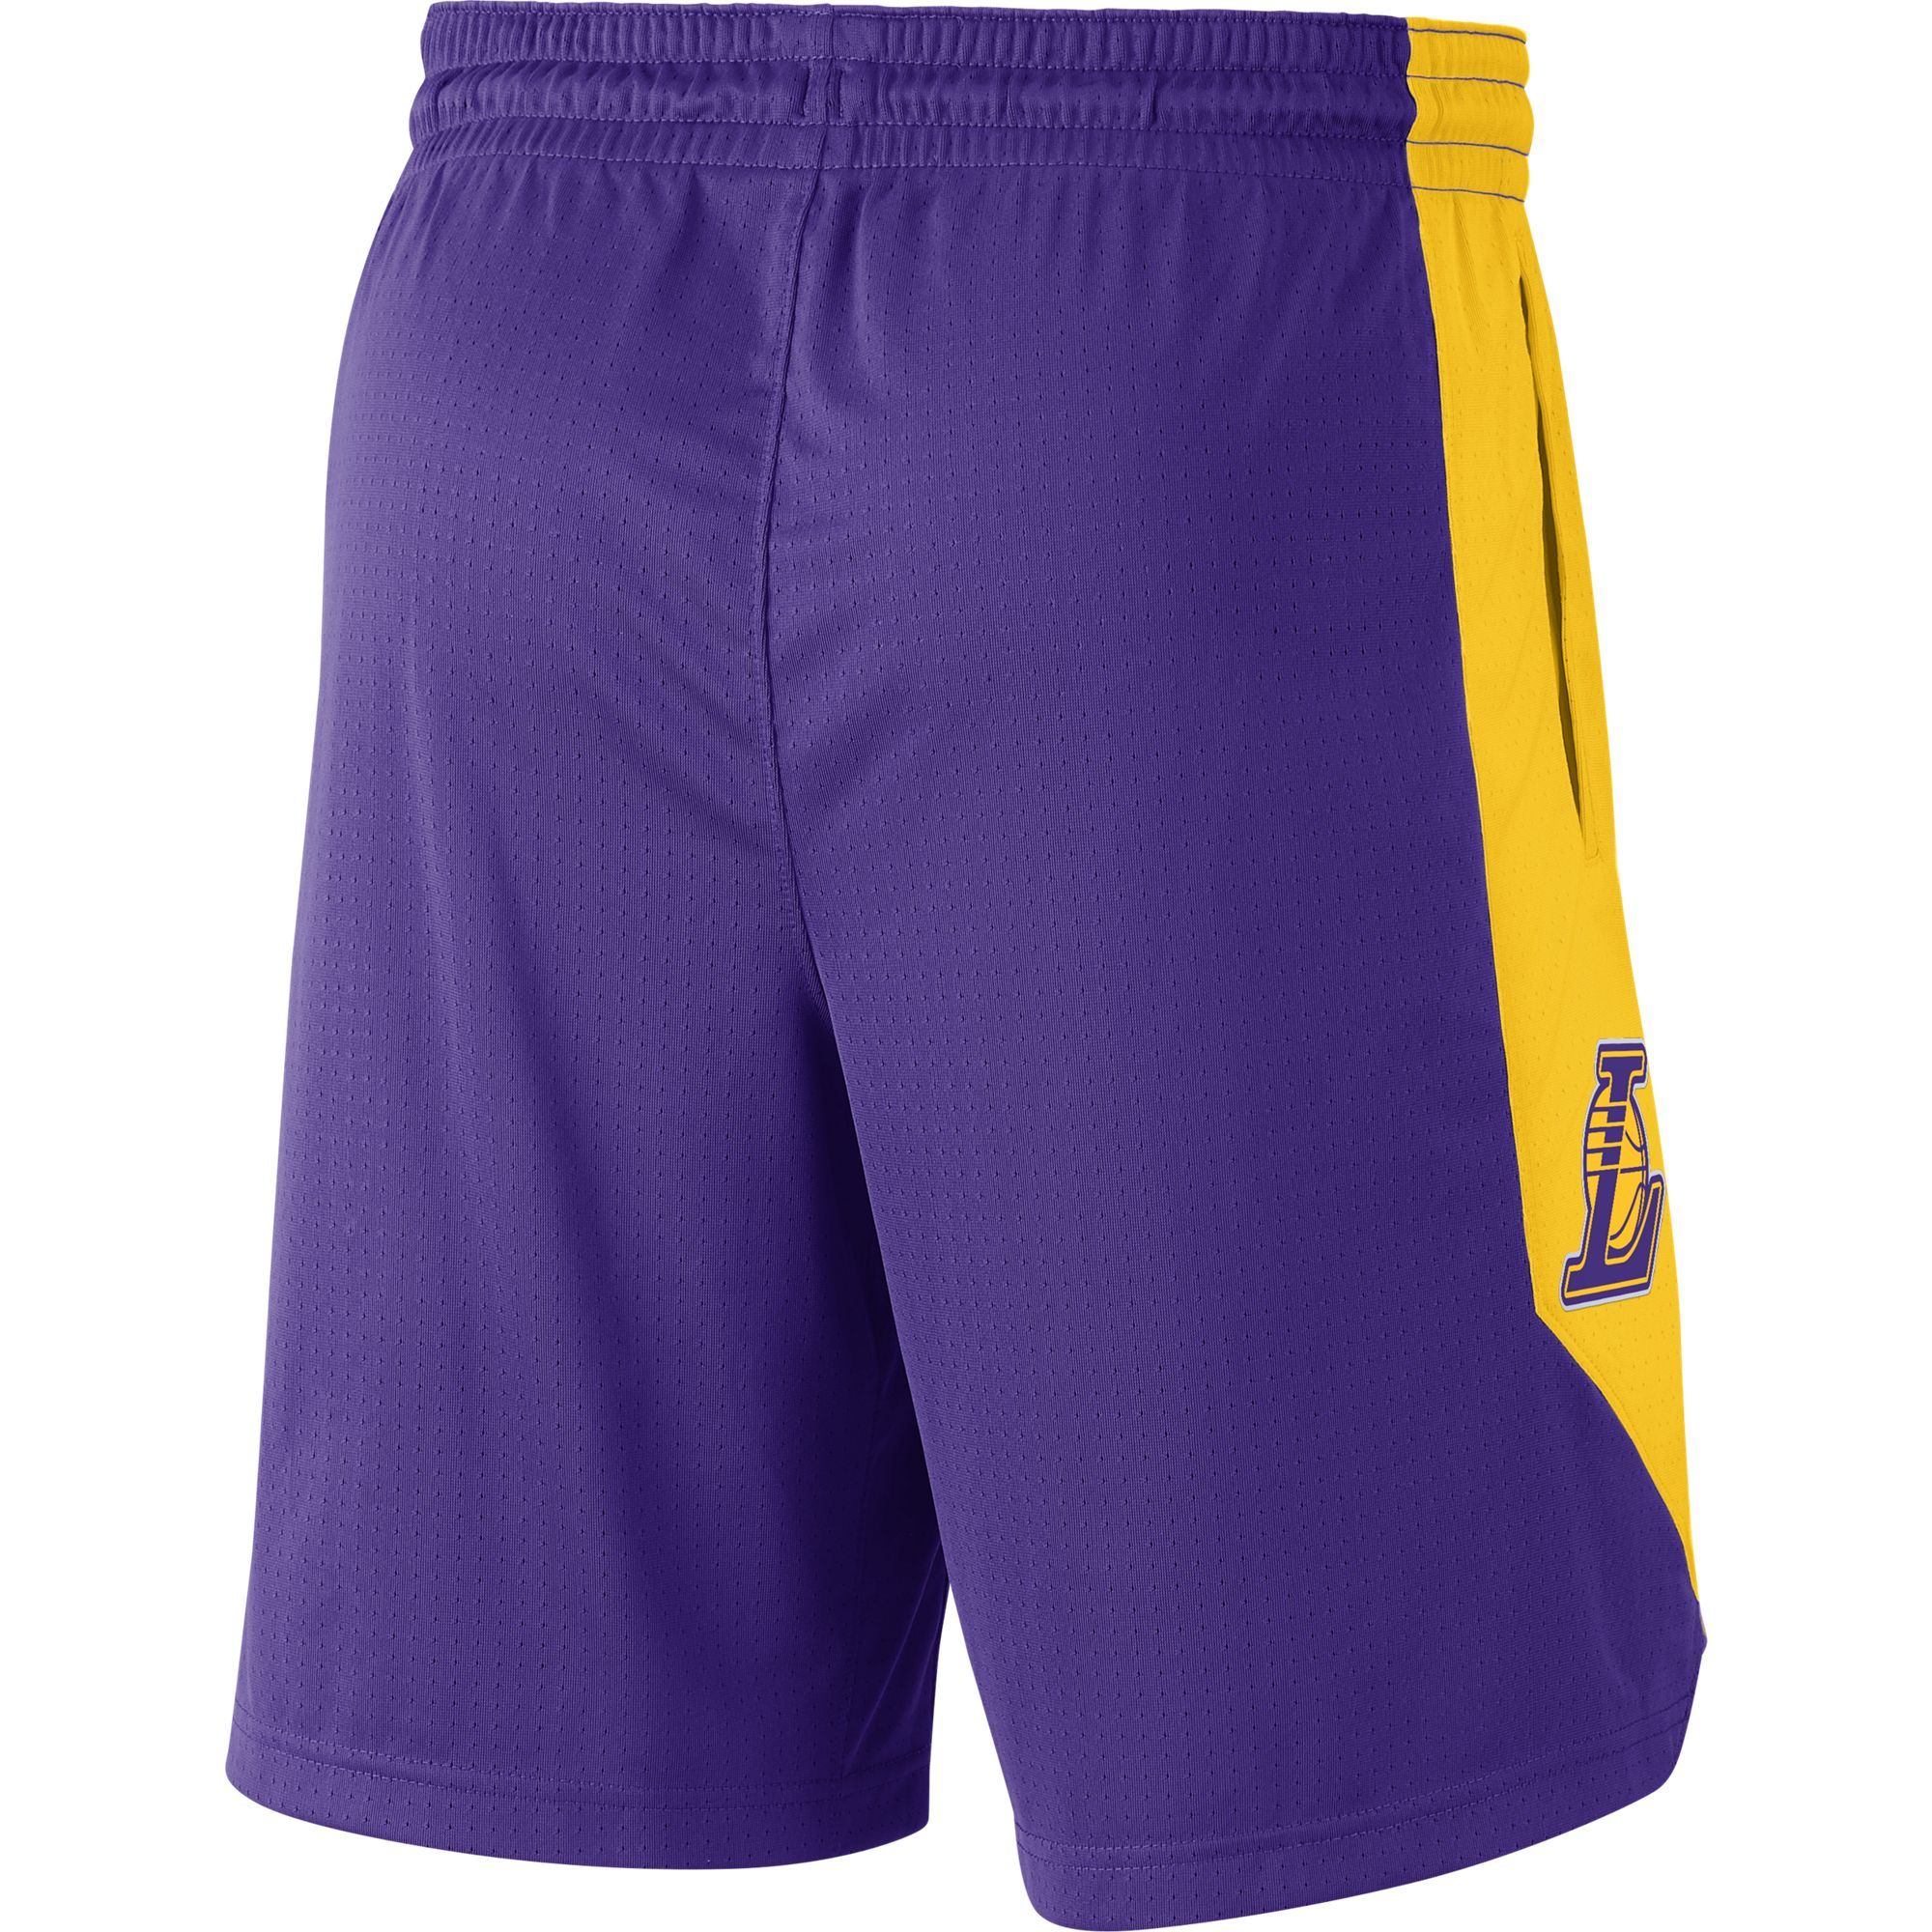 purple and yellow nike shorts